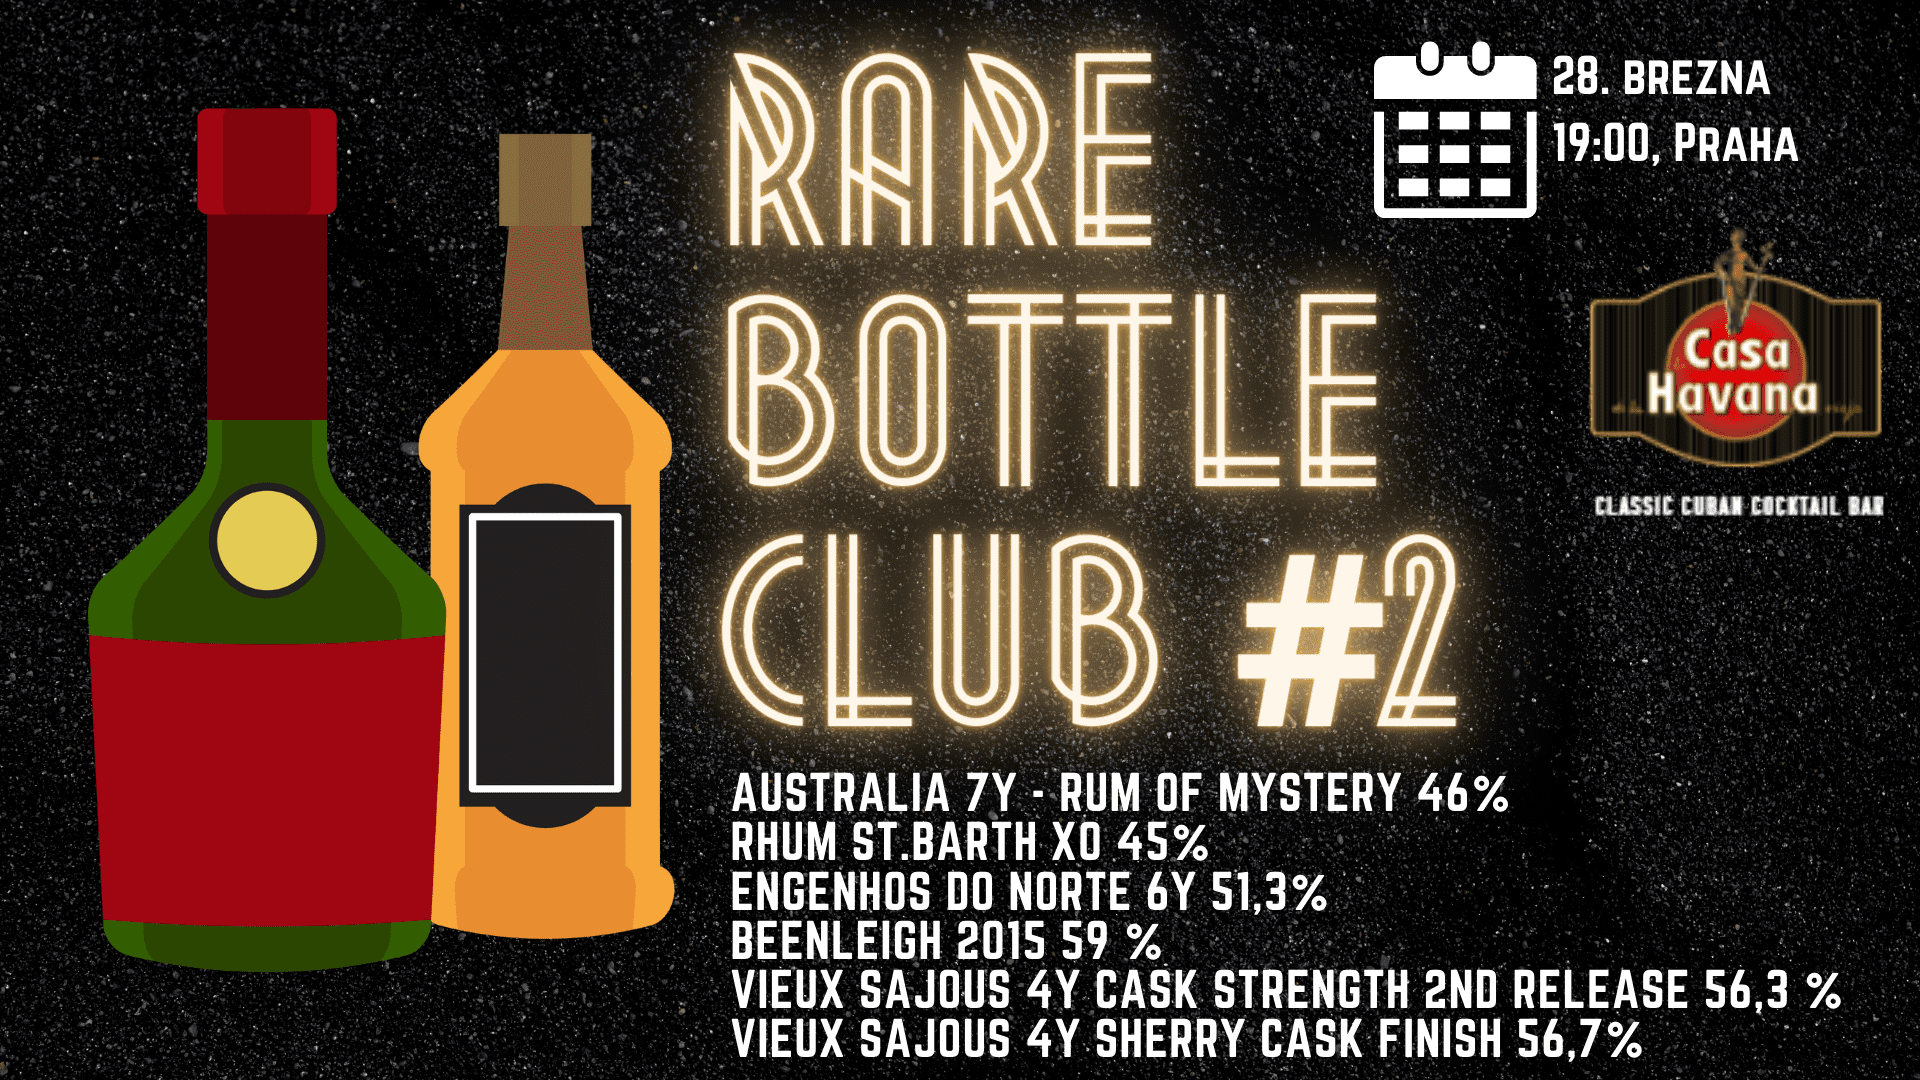 Rare Bottle Club #2 - z Austrálie na Haiti